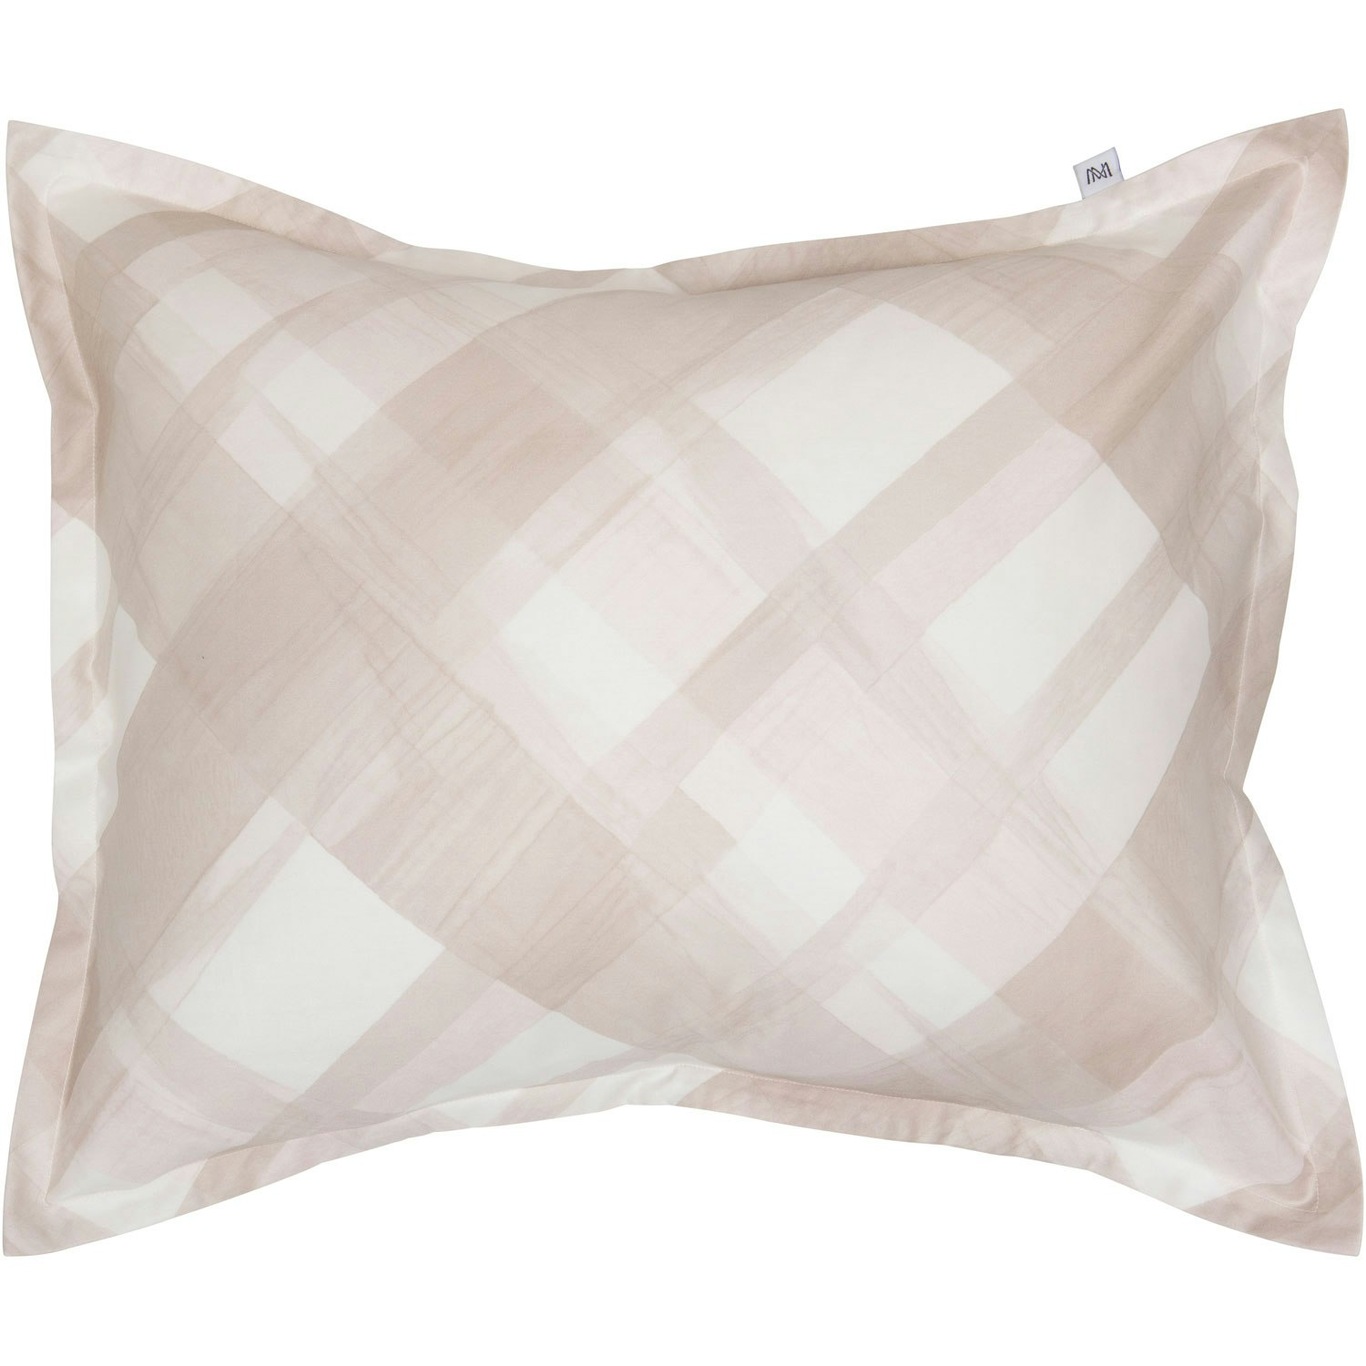 Spazzola Pillowcase 50x60 cm, Beige